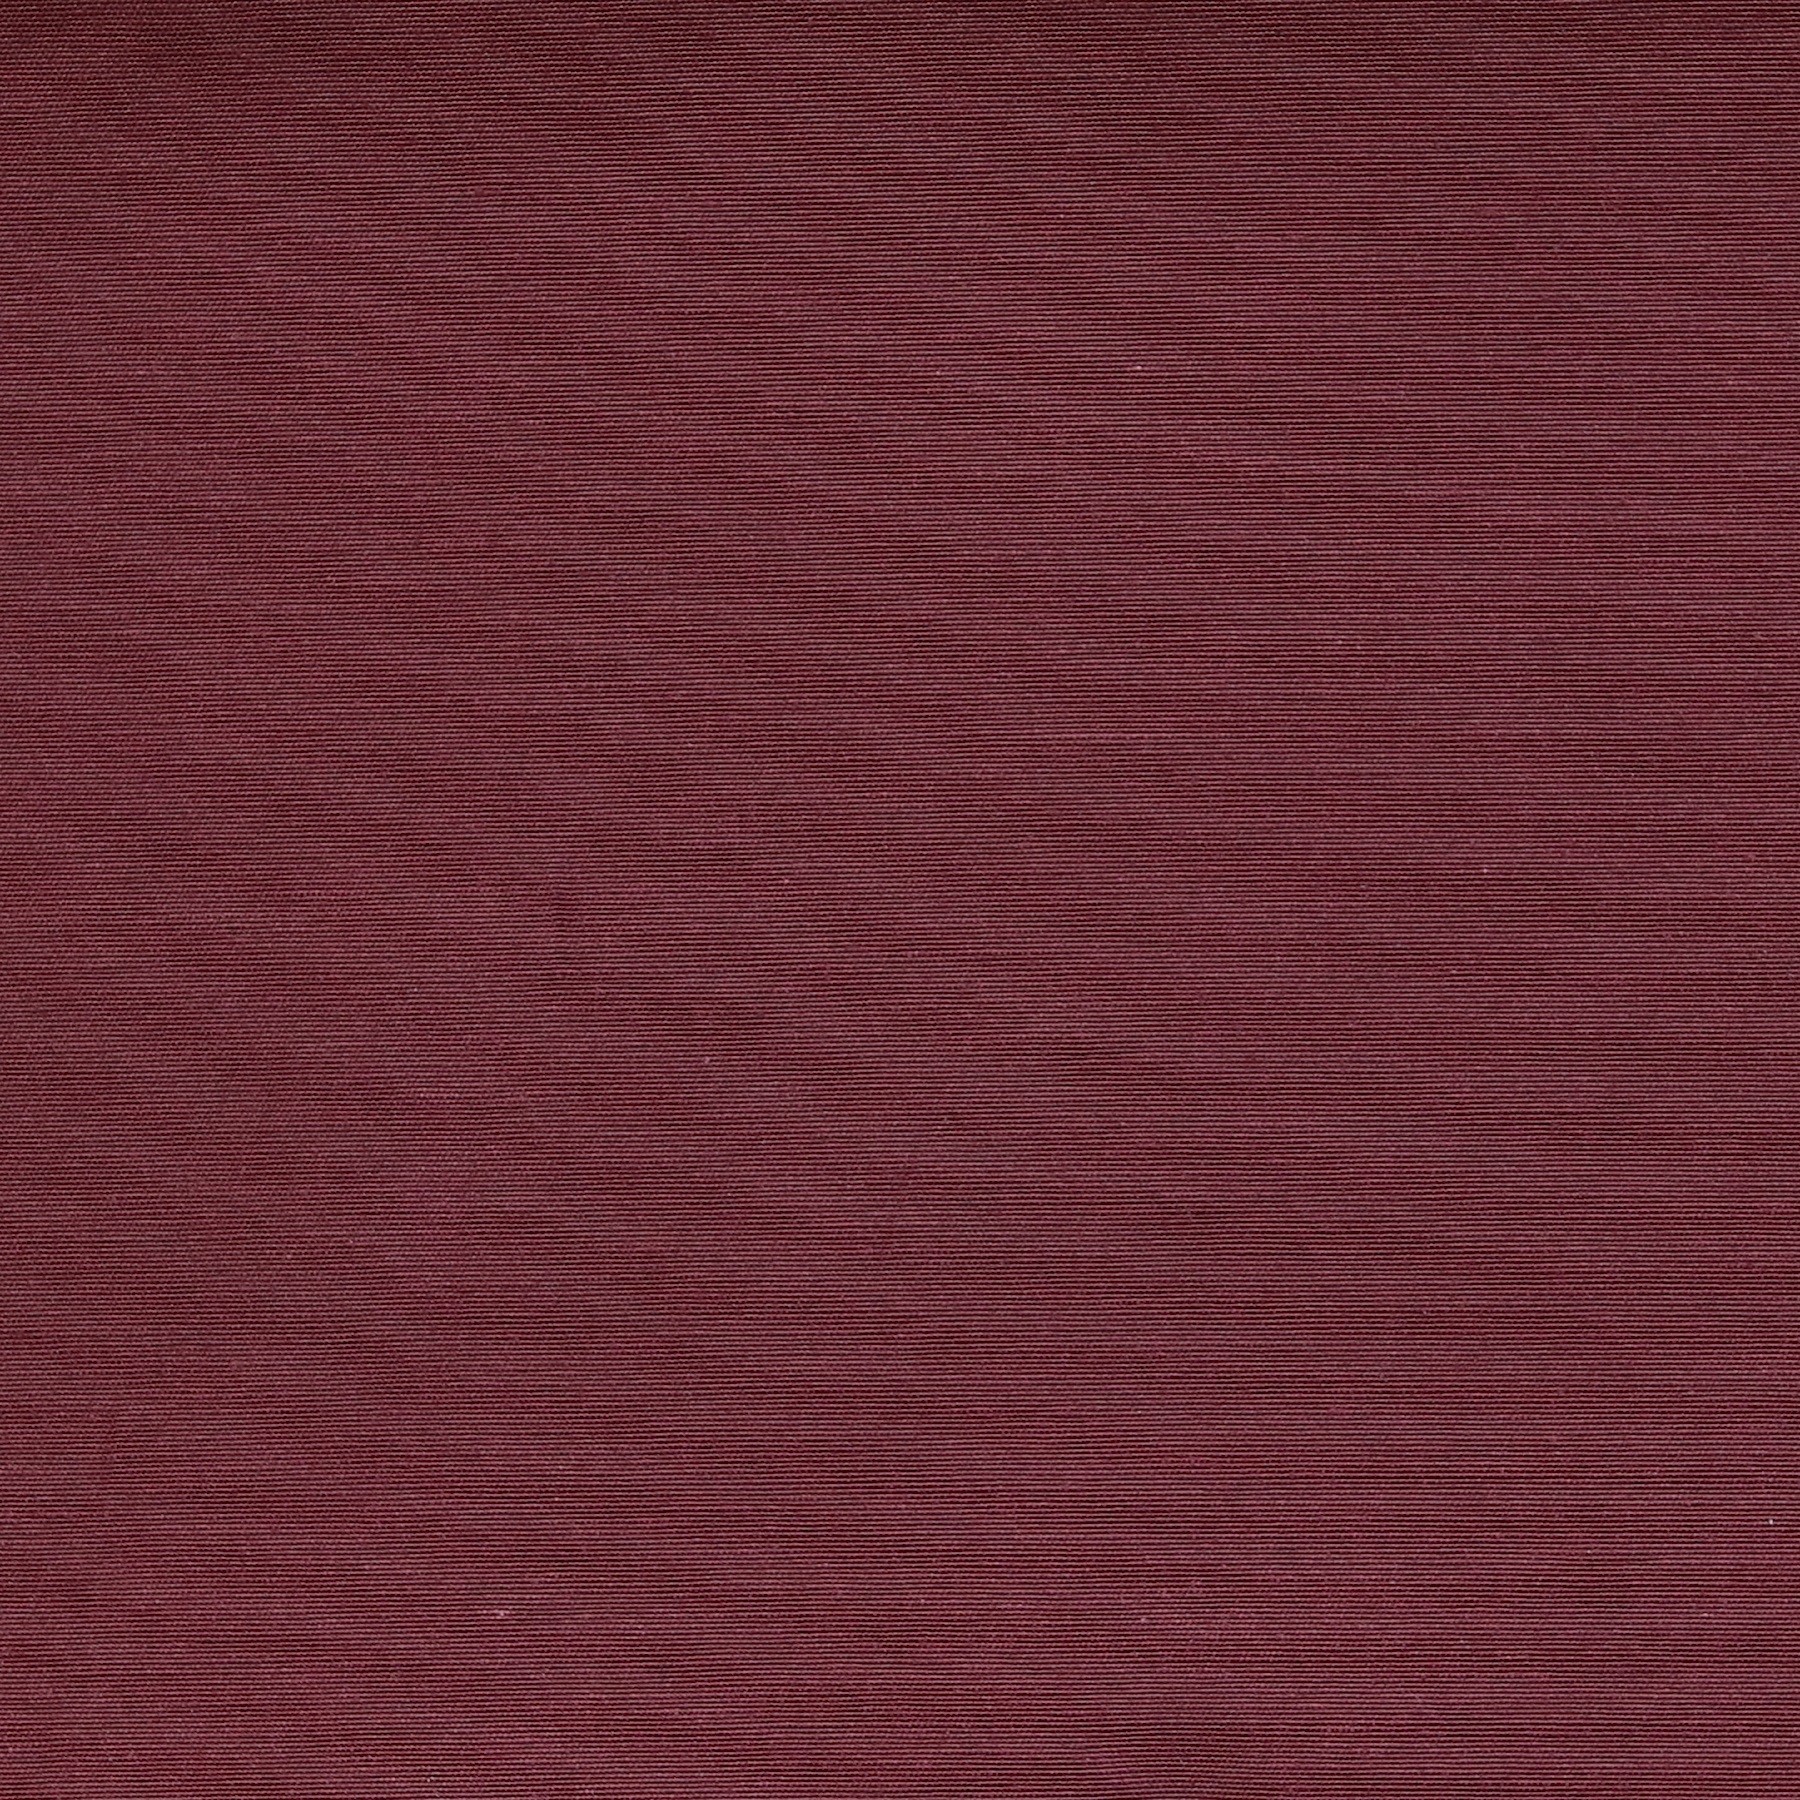 bi fold 130 x 190 cm futon - Bordeaux Red